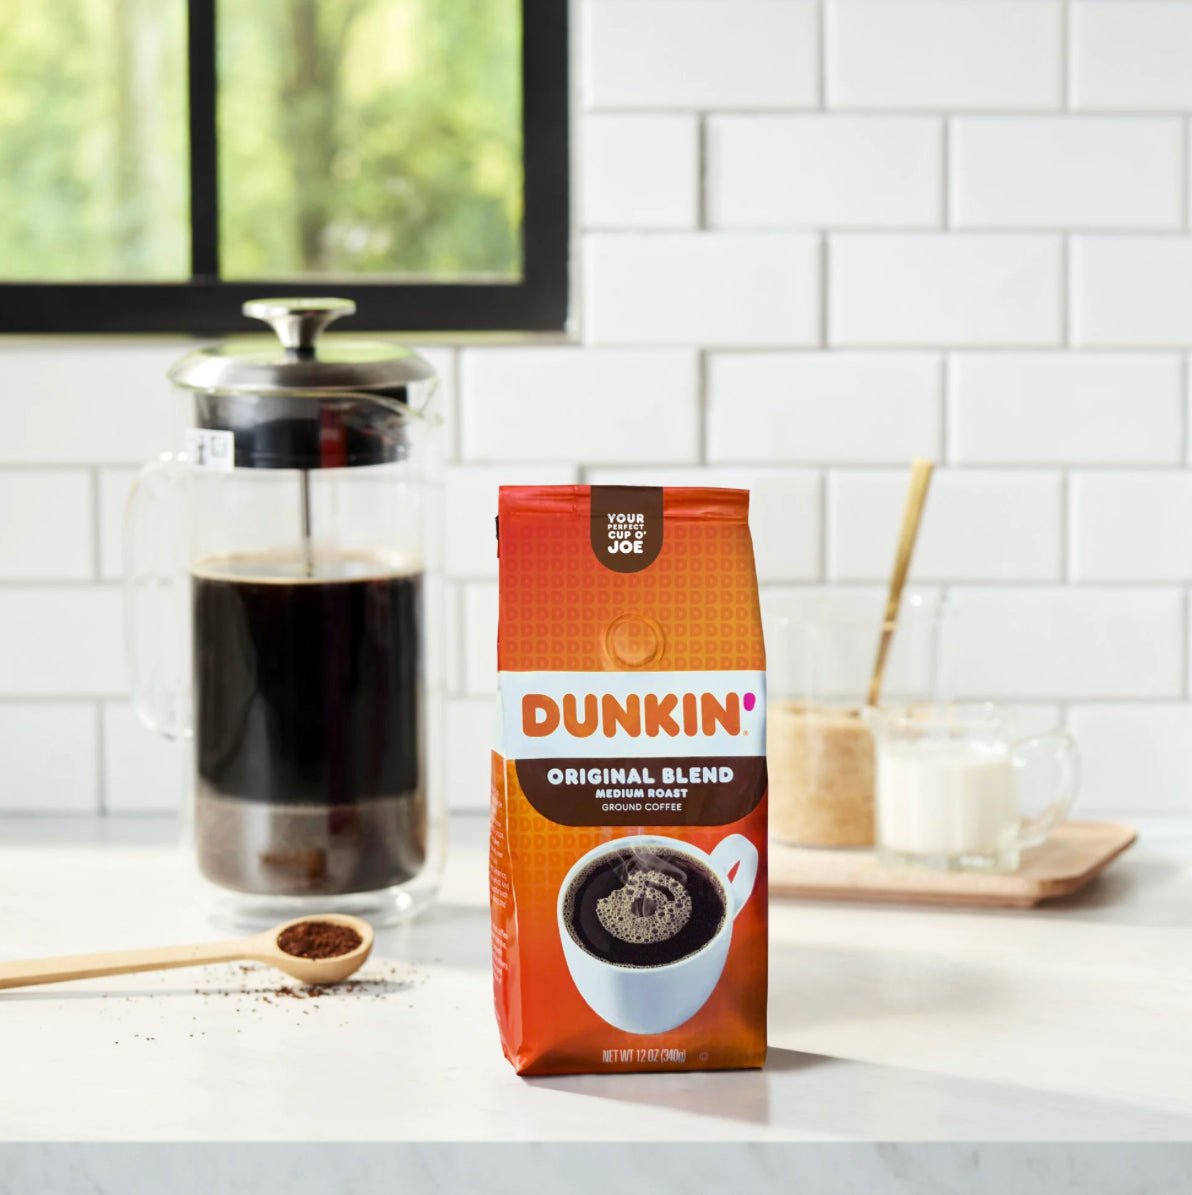 Dunkin' Original Blend Medium Roast Coffee 12oz